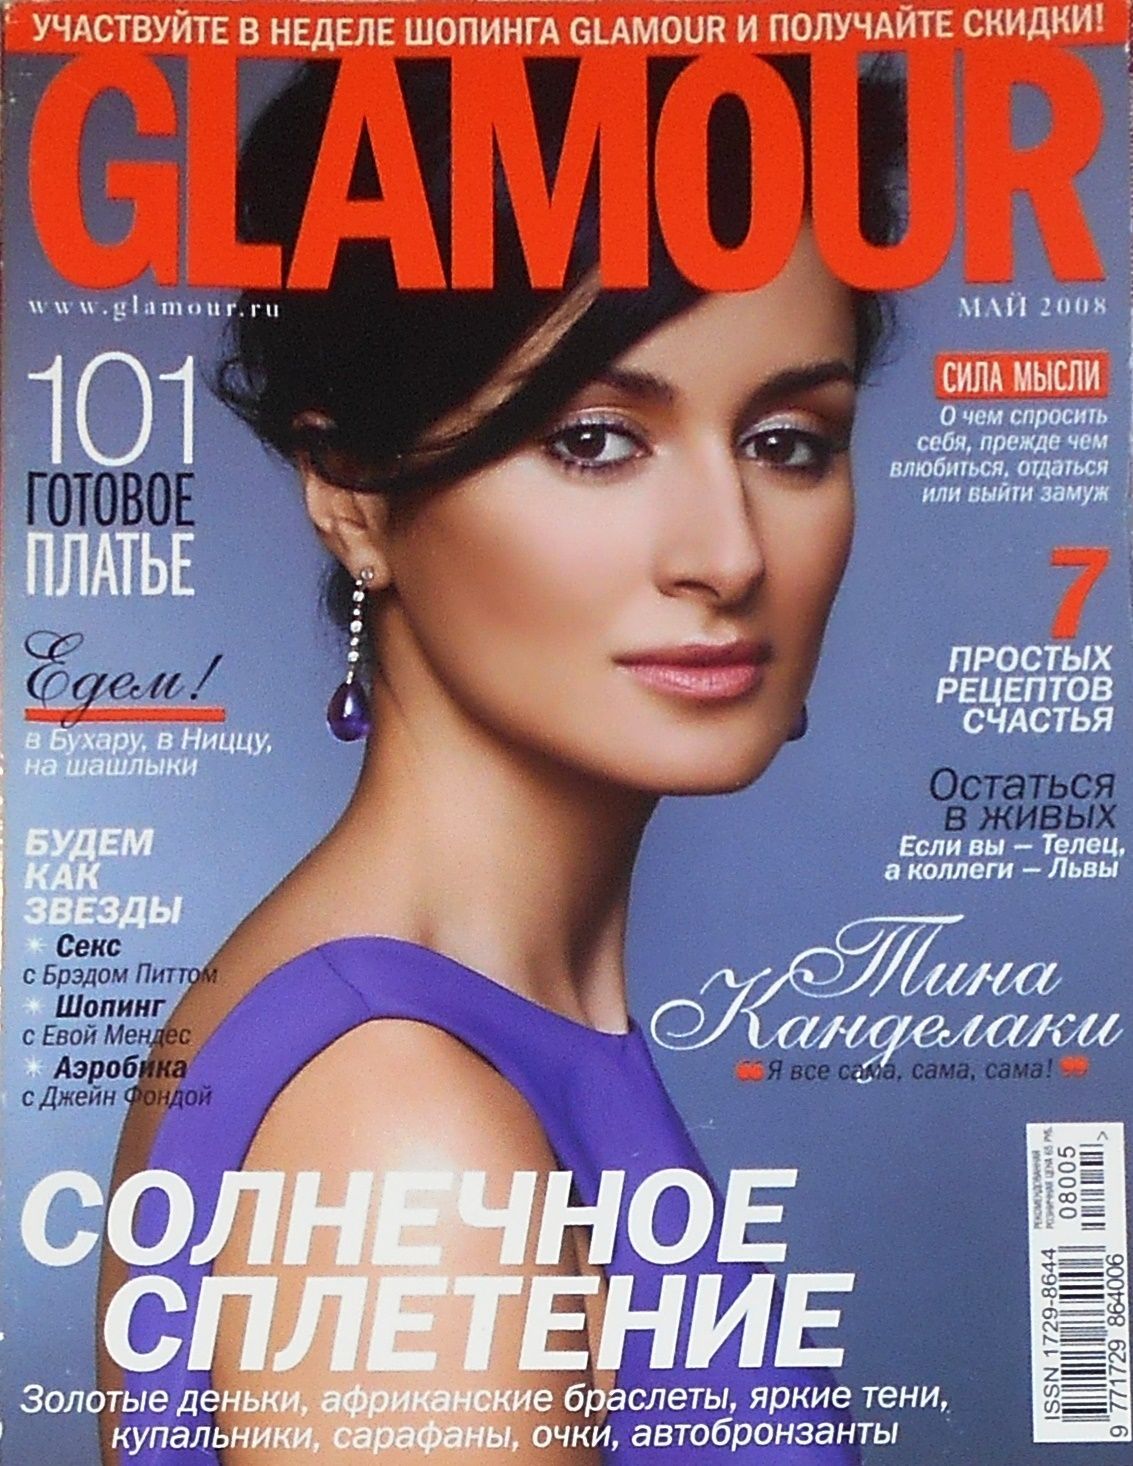 Glamour журнал. Обложка журнала гламур. Обложки женских журналов.